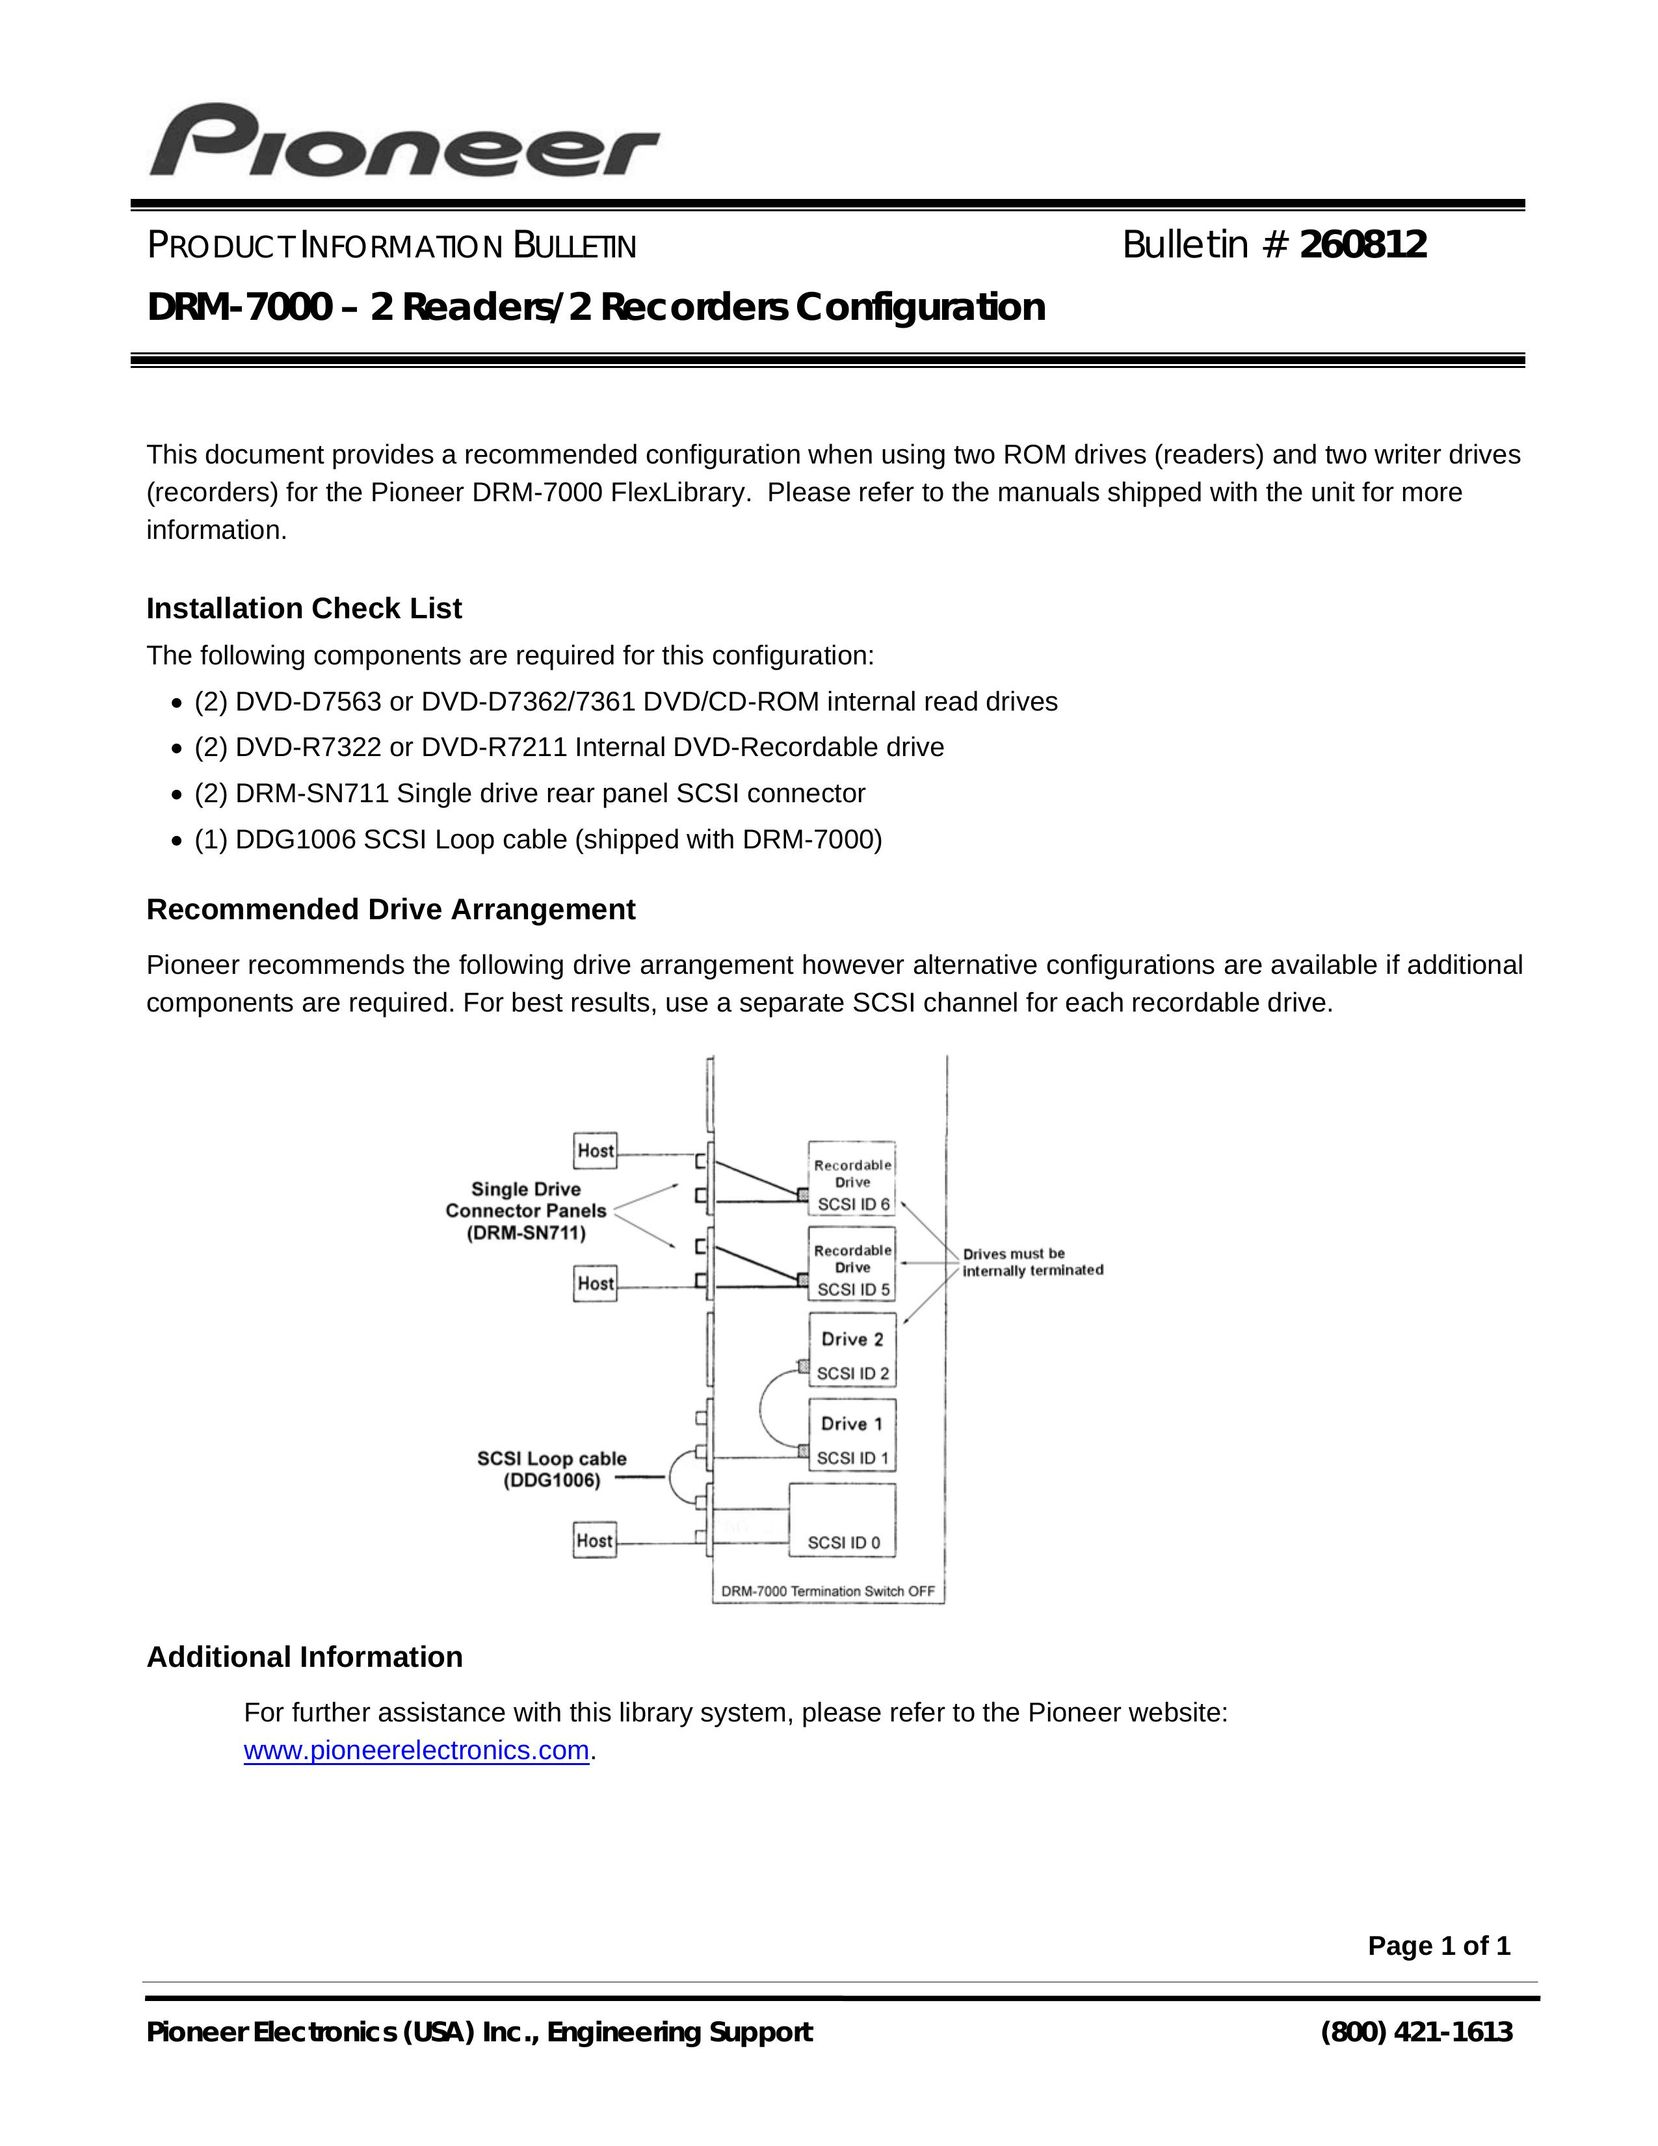 Pioneer DRM-7000 DVR User Manual